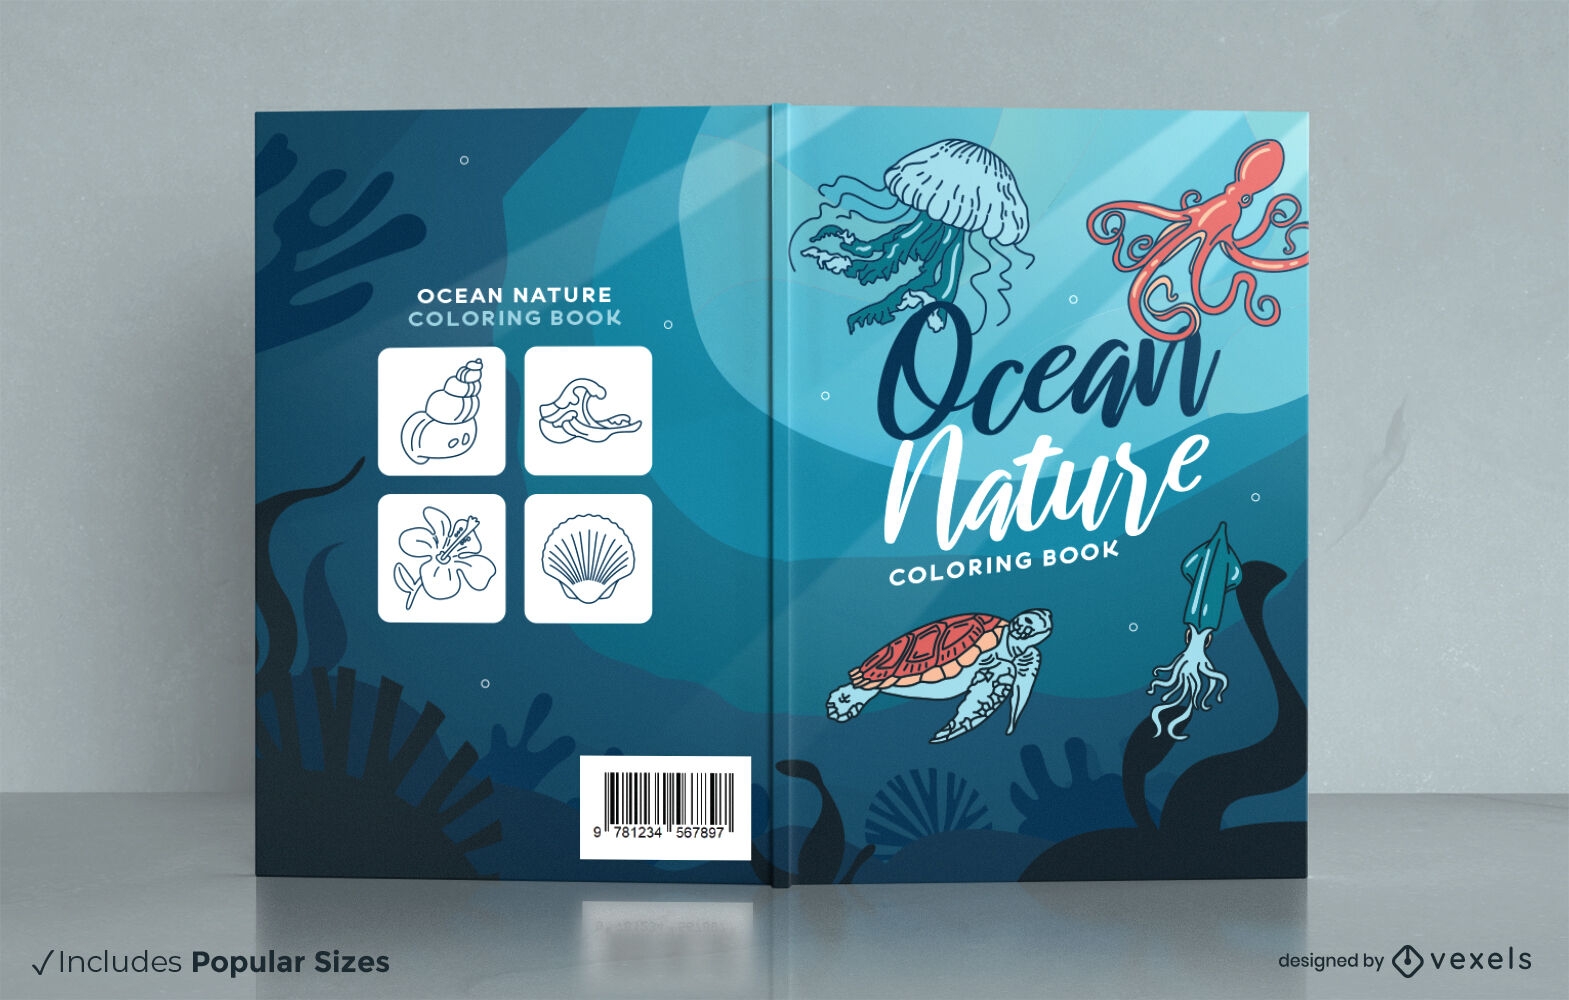 Ocean coloring book cover design